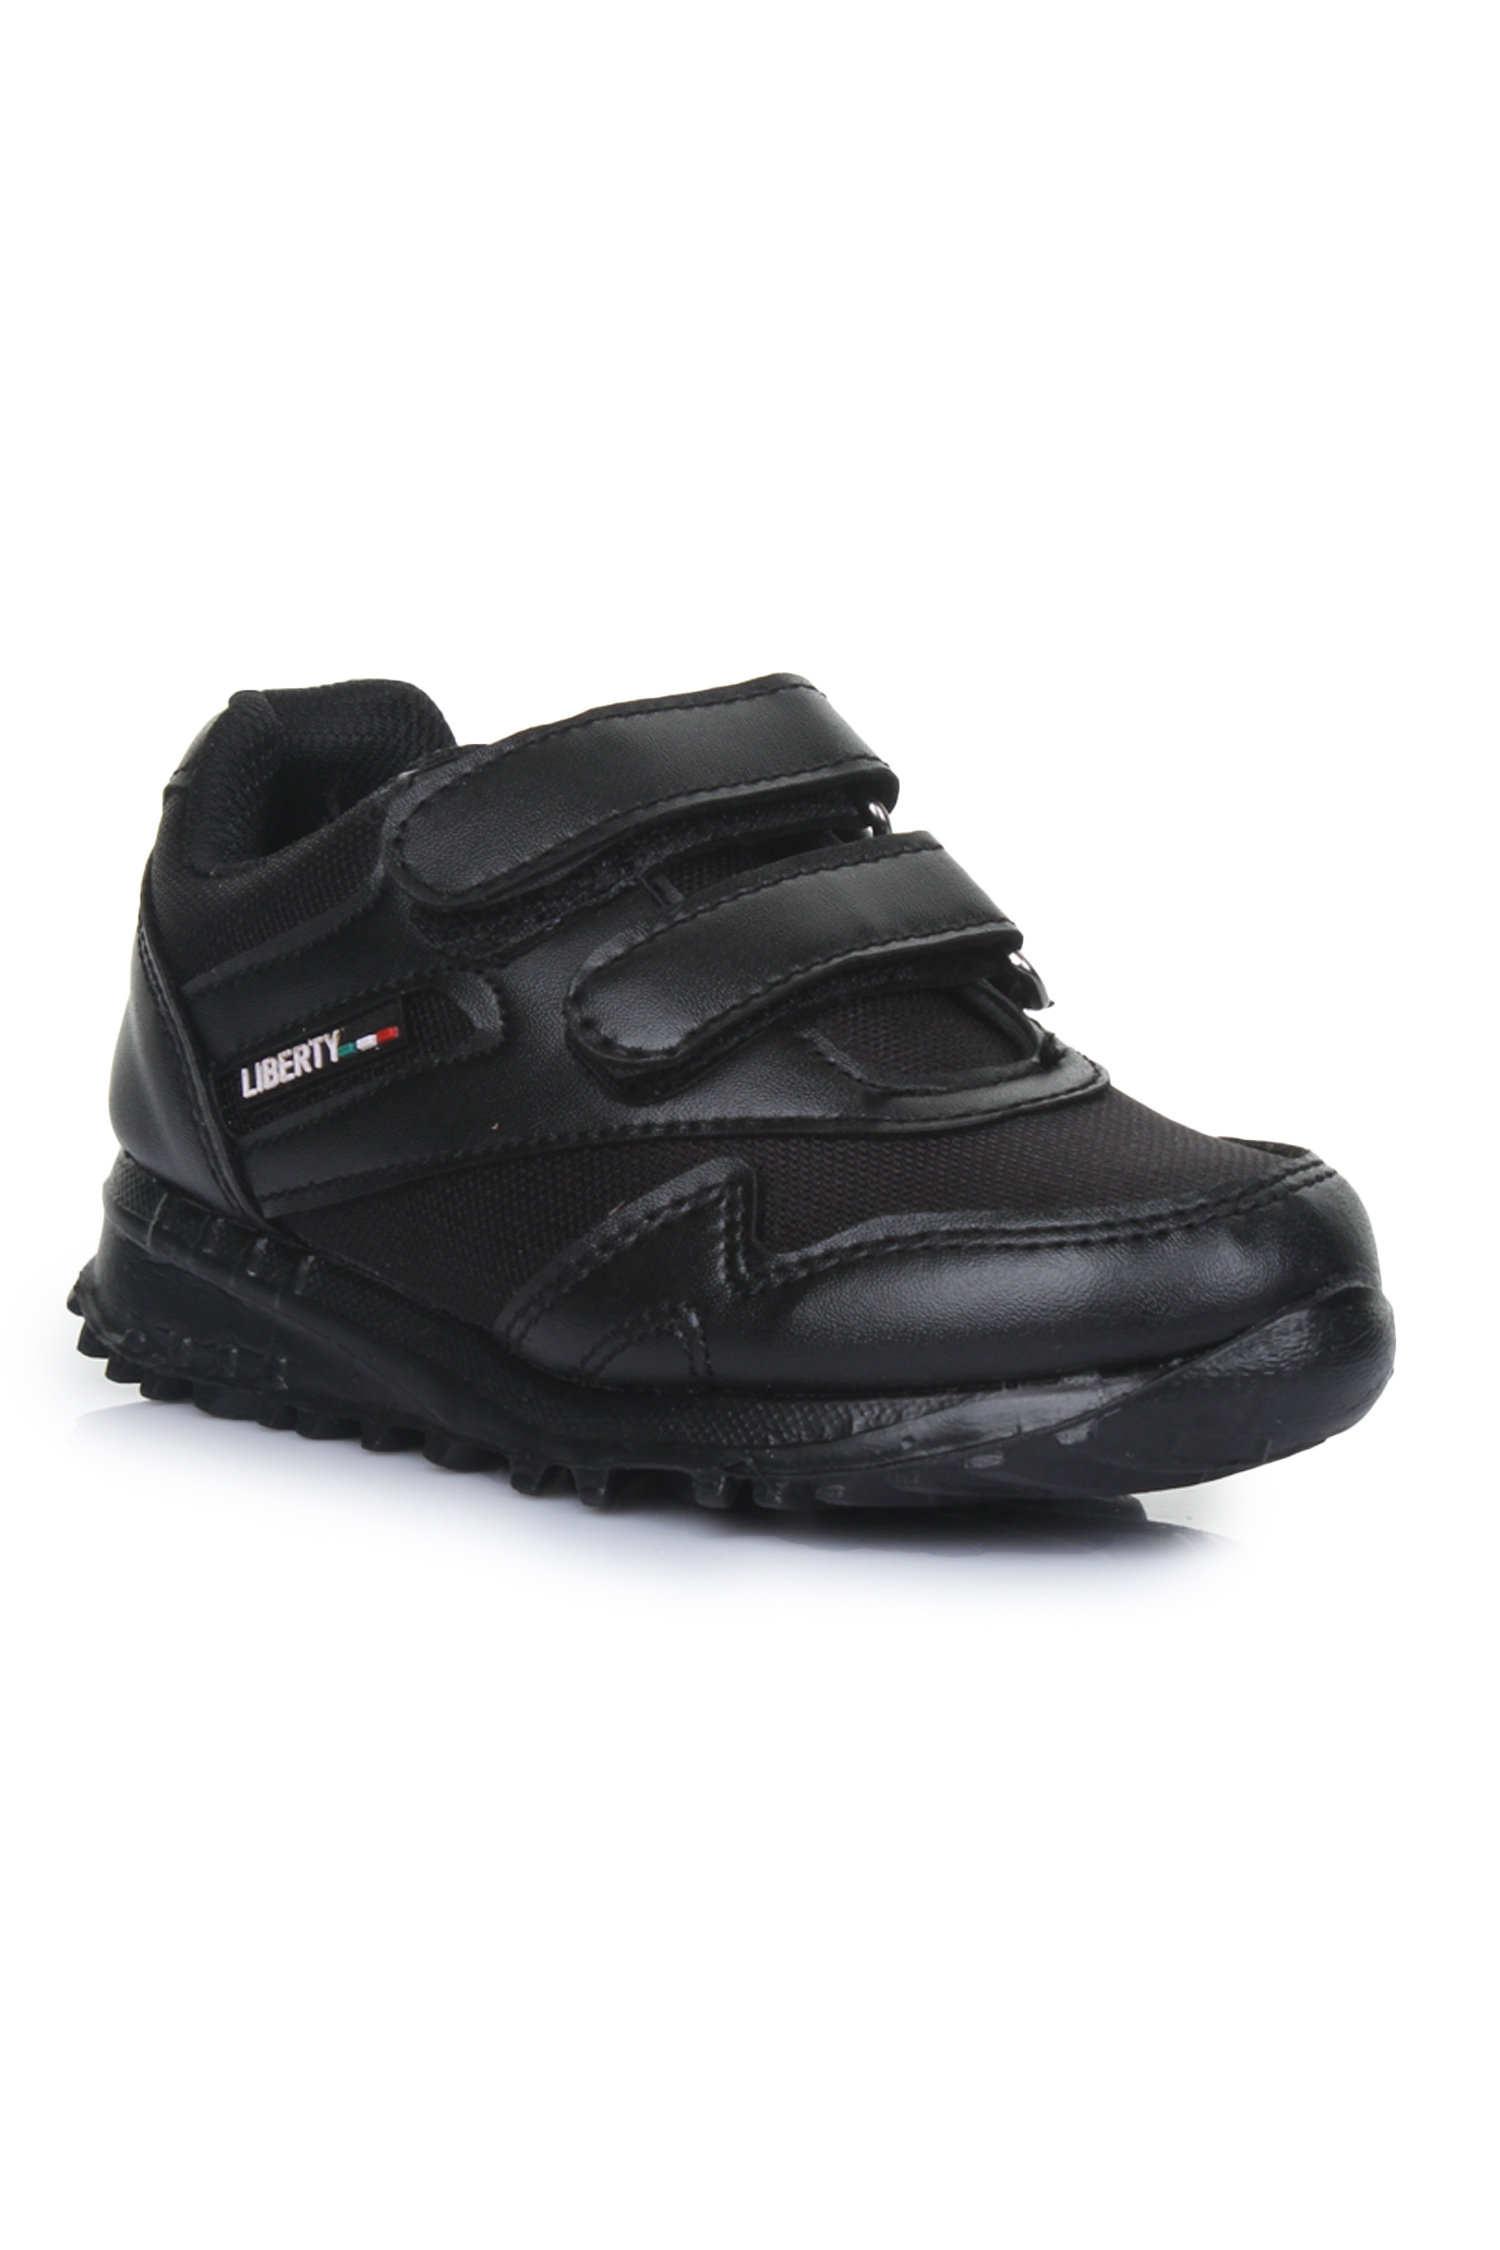 Liberty | Liberty Force 10 Black School Shoes 9906-90VGN_Black For - Boys